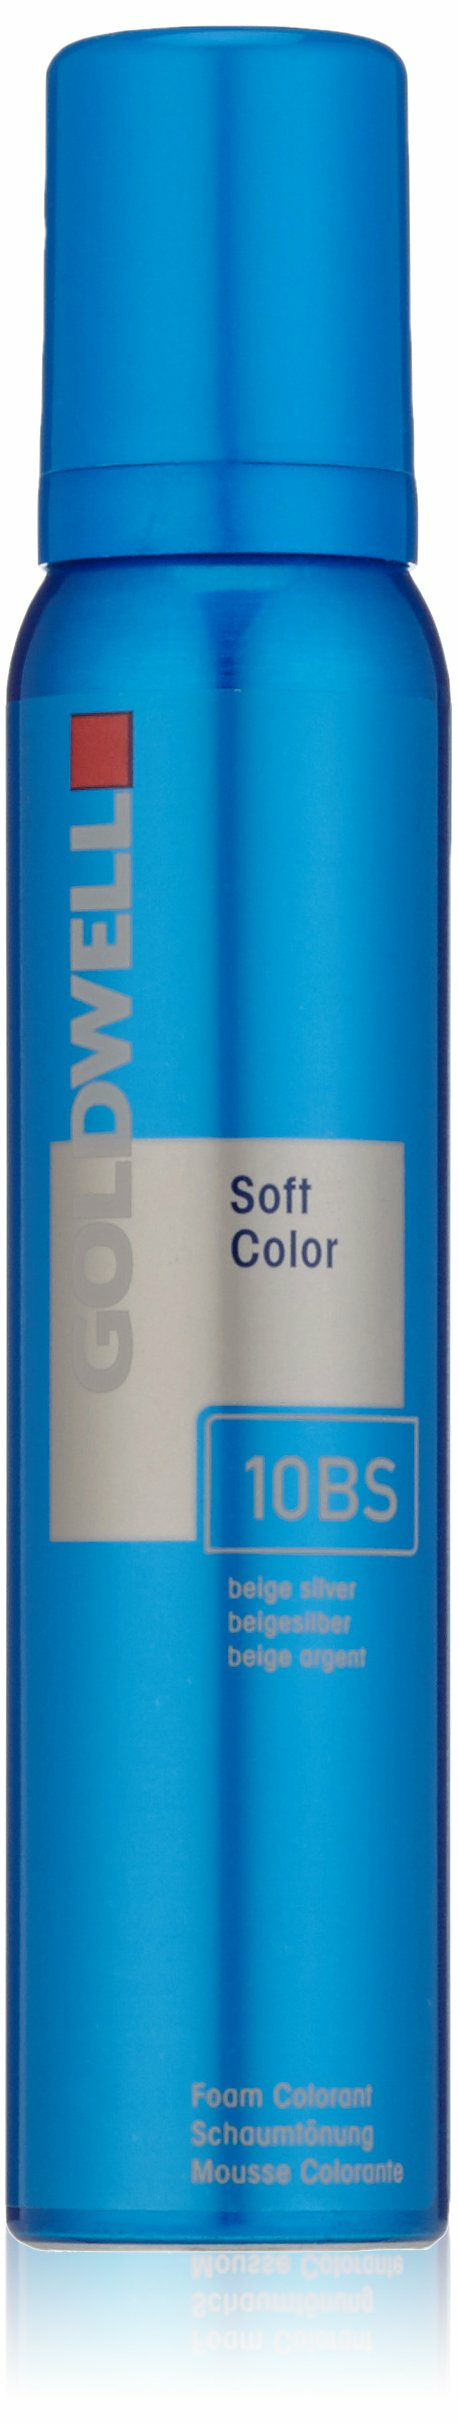 Colorance Soft Color 10BS